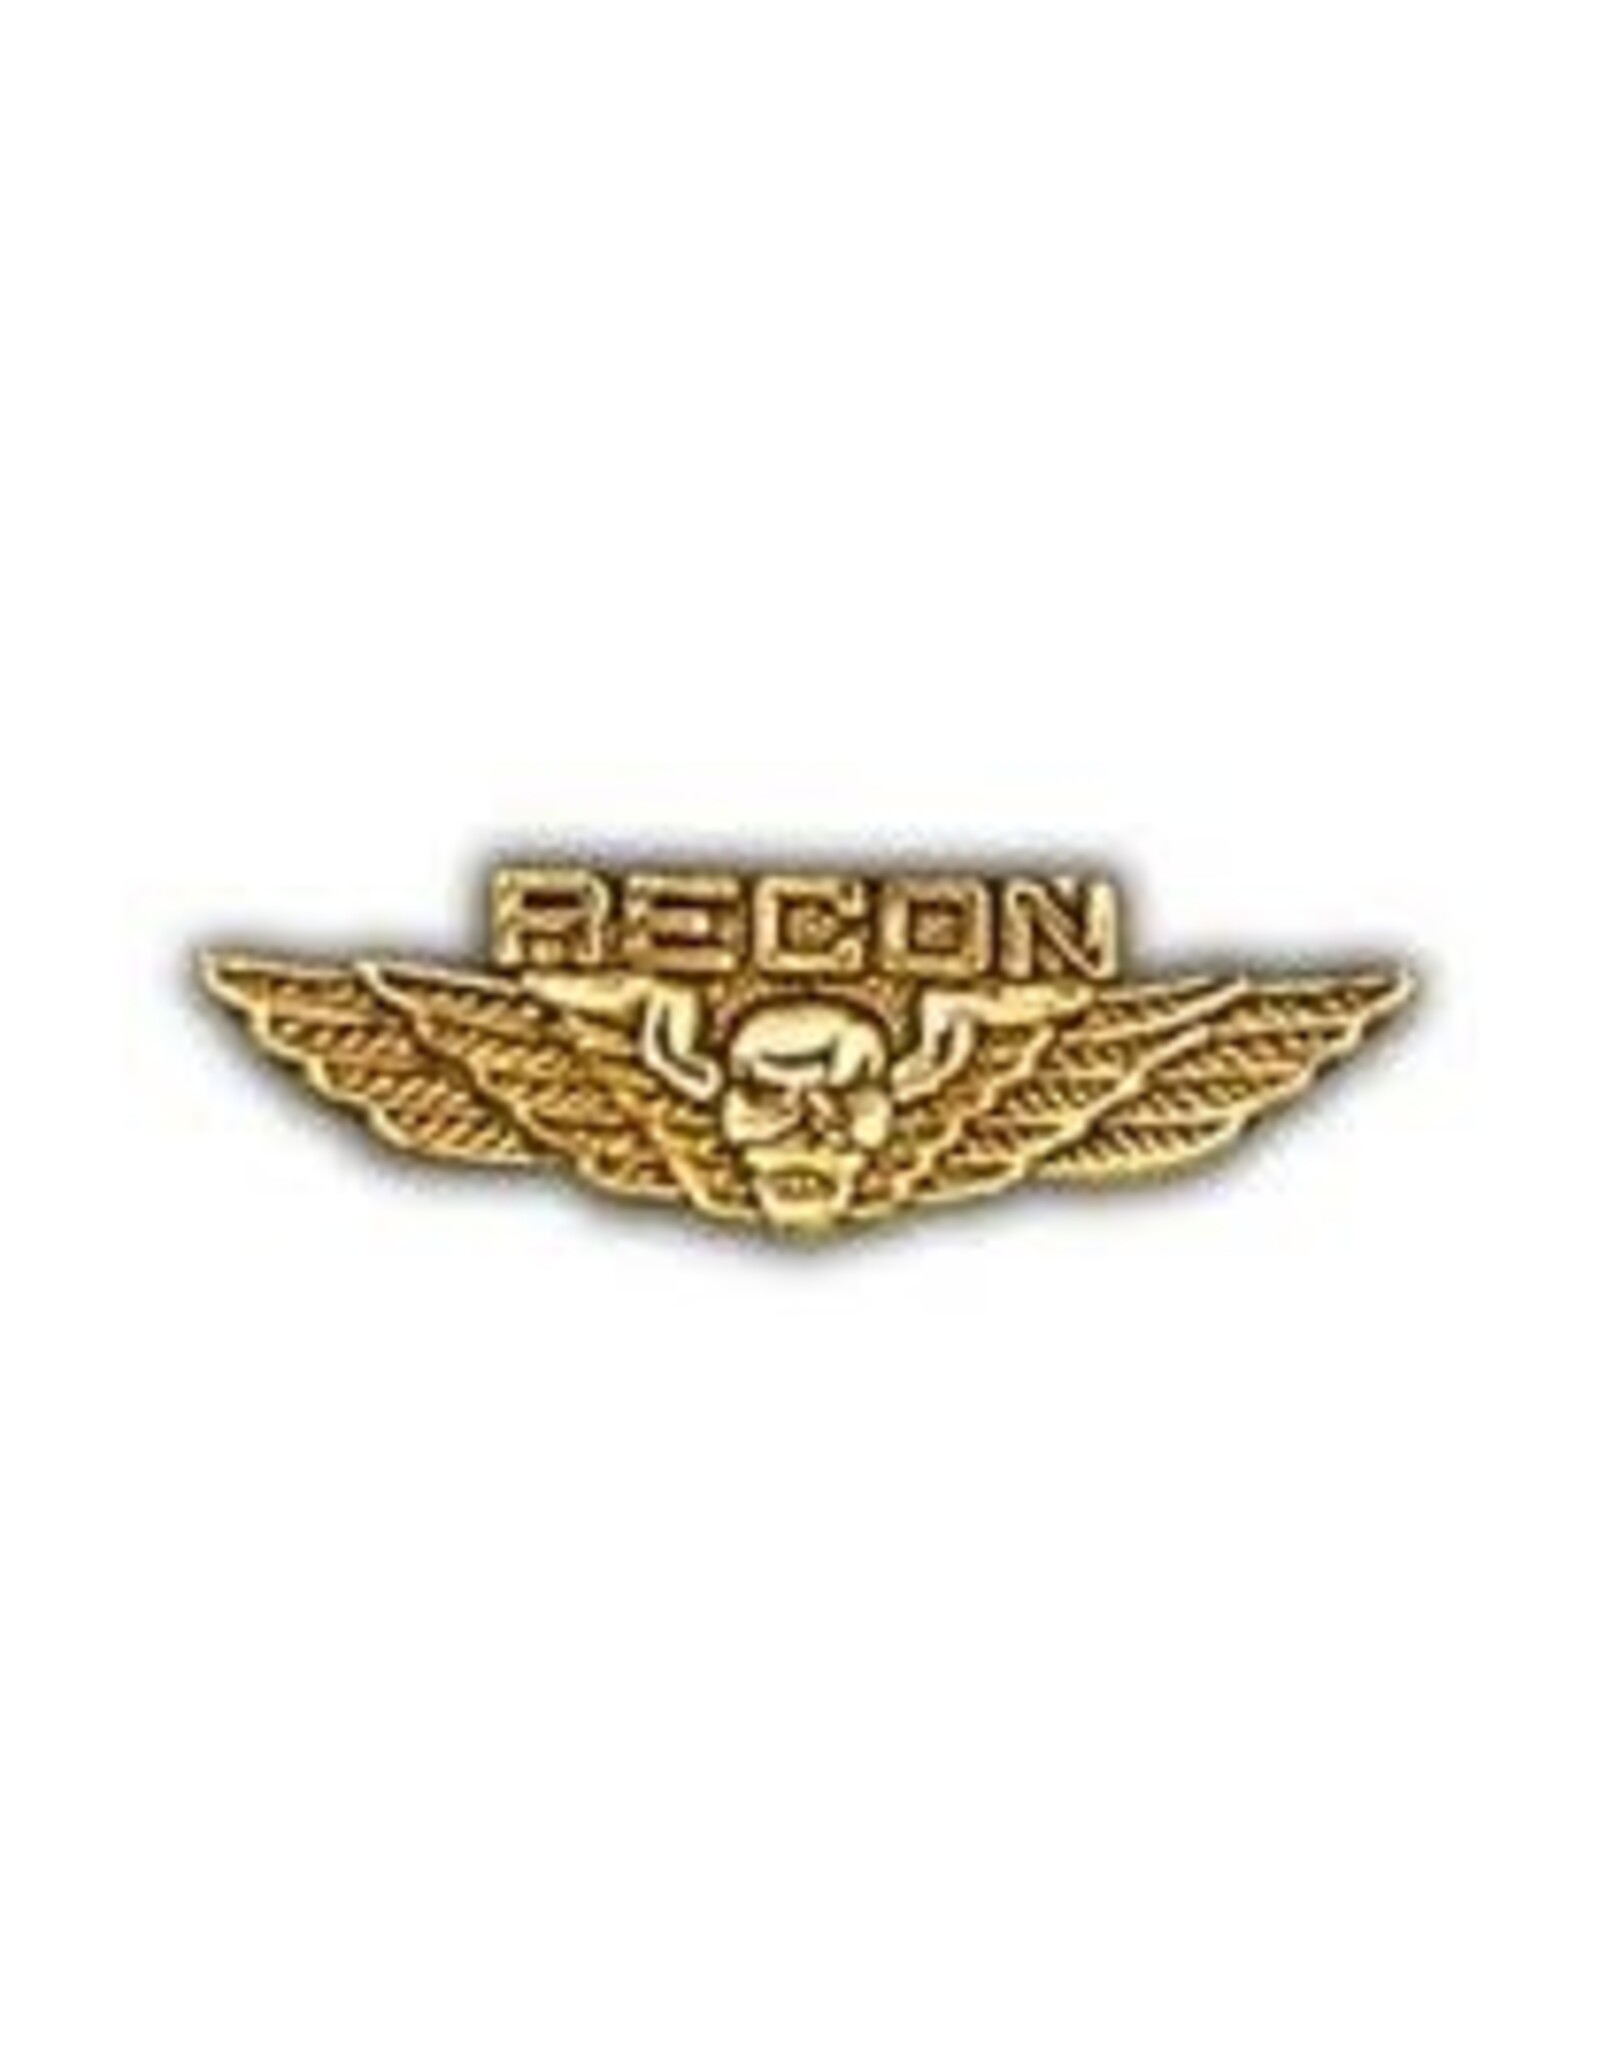 Pin - Wing USMC Recon